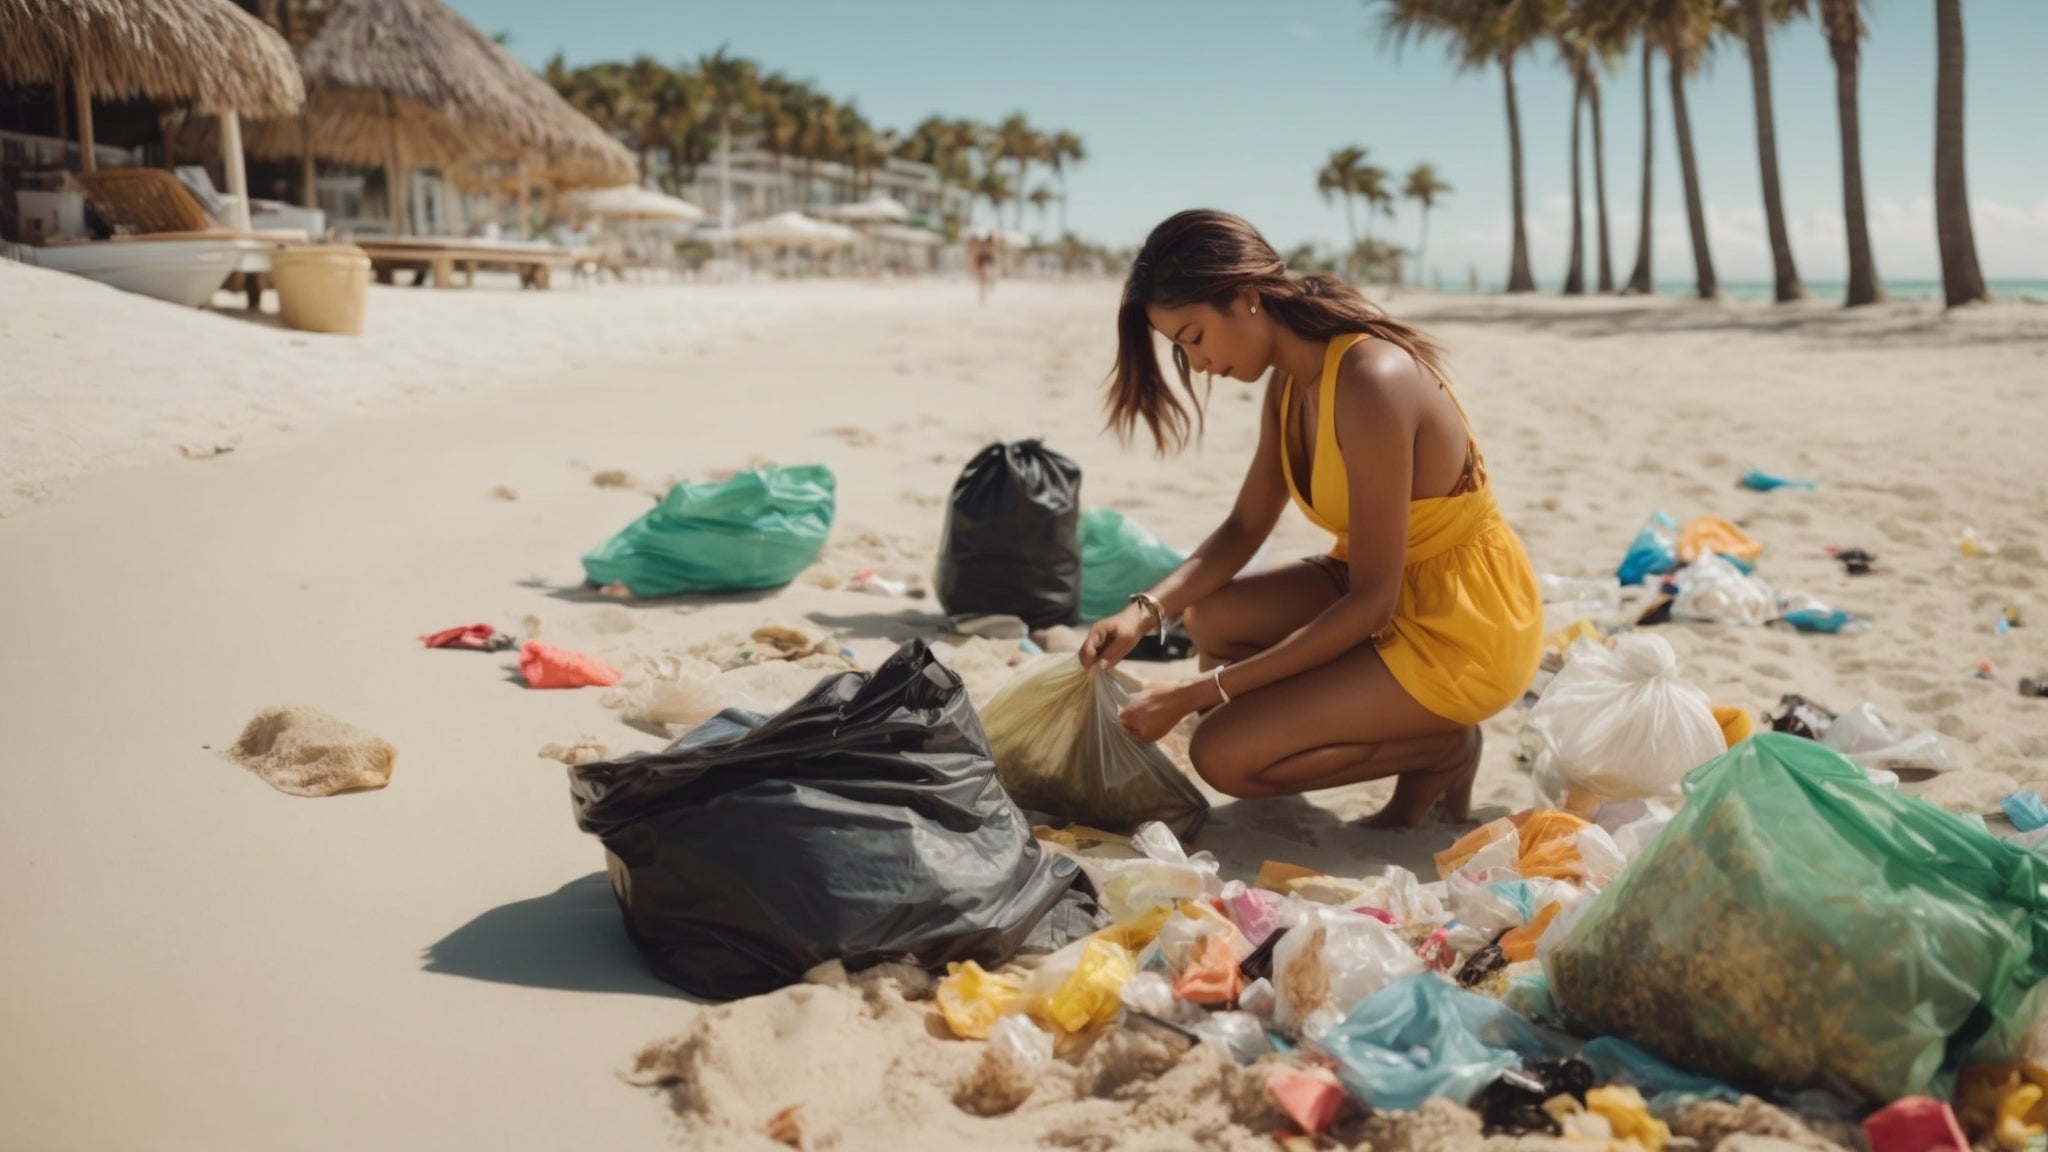 Brown haired women in orange beach dress picking up trash on the beach